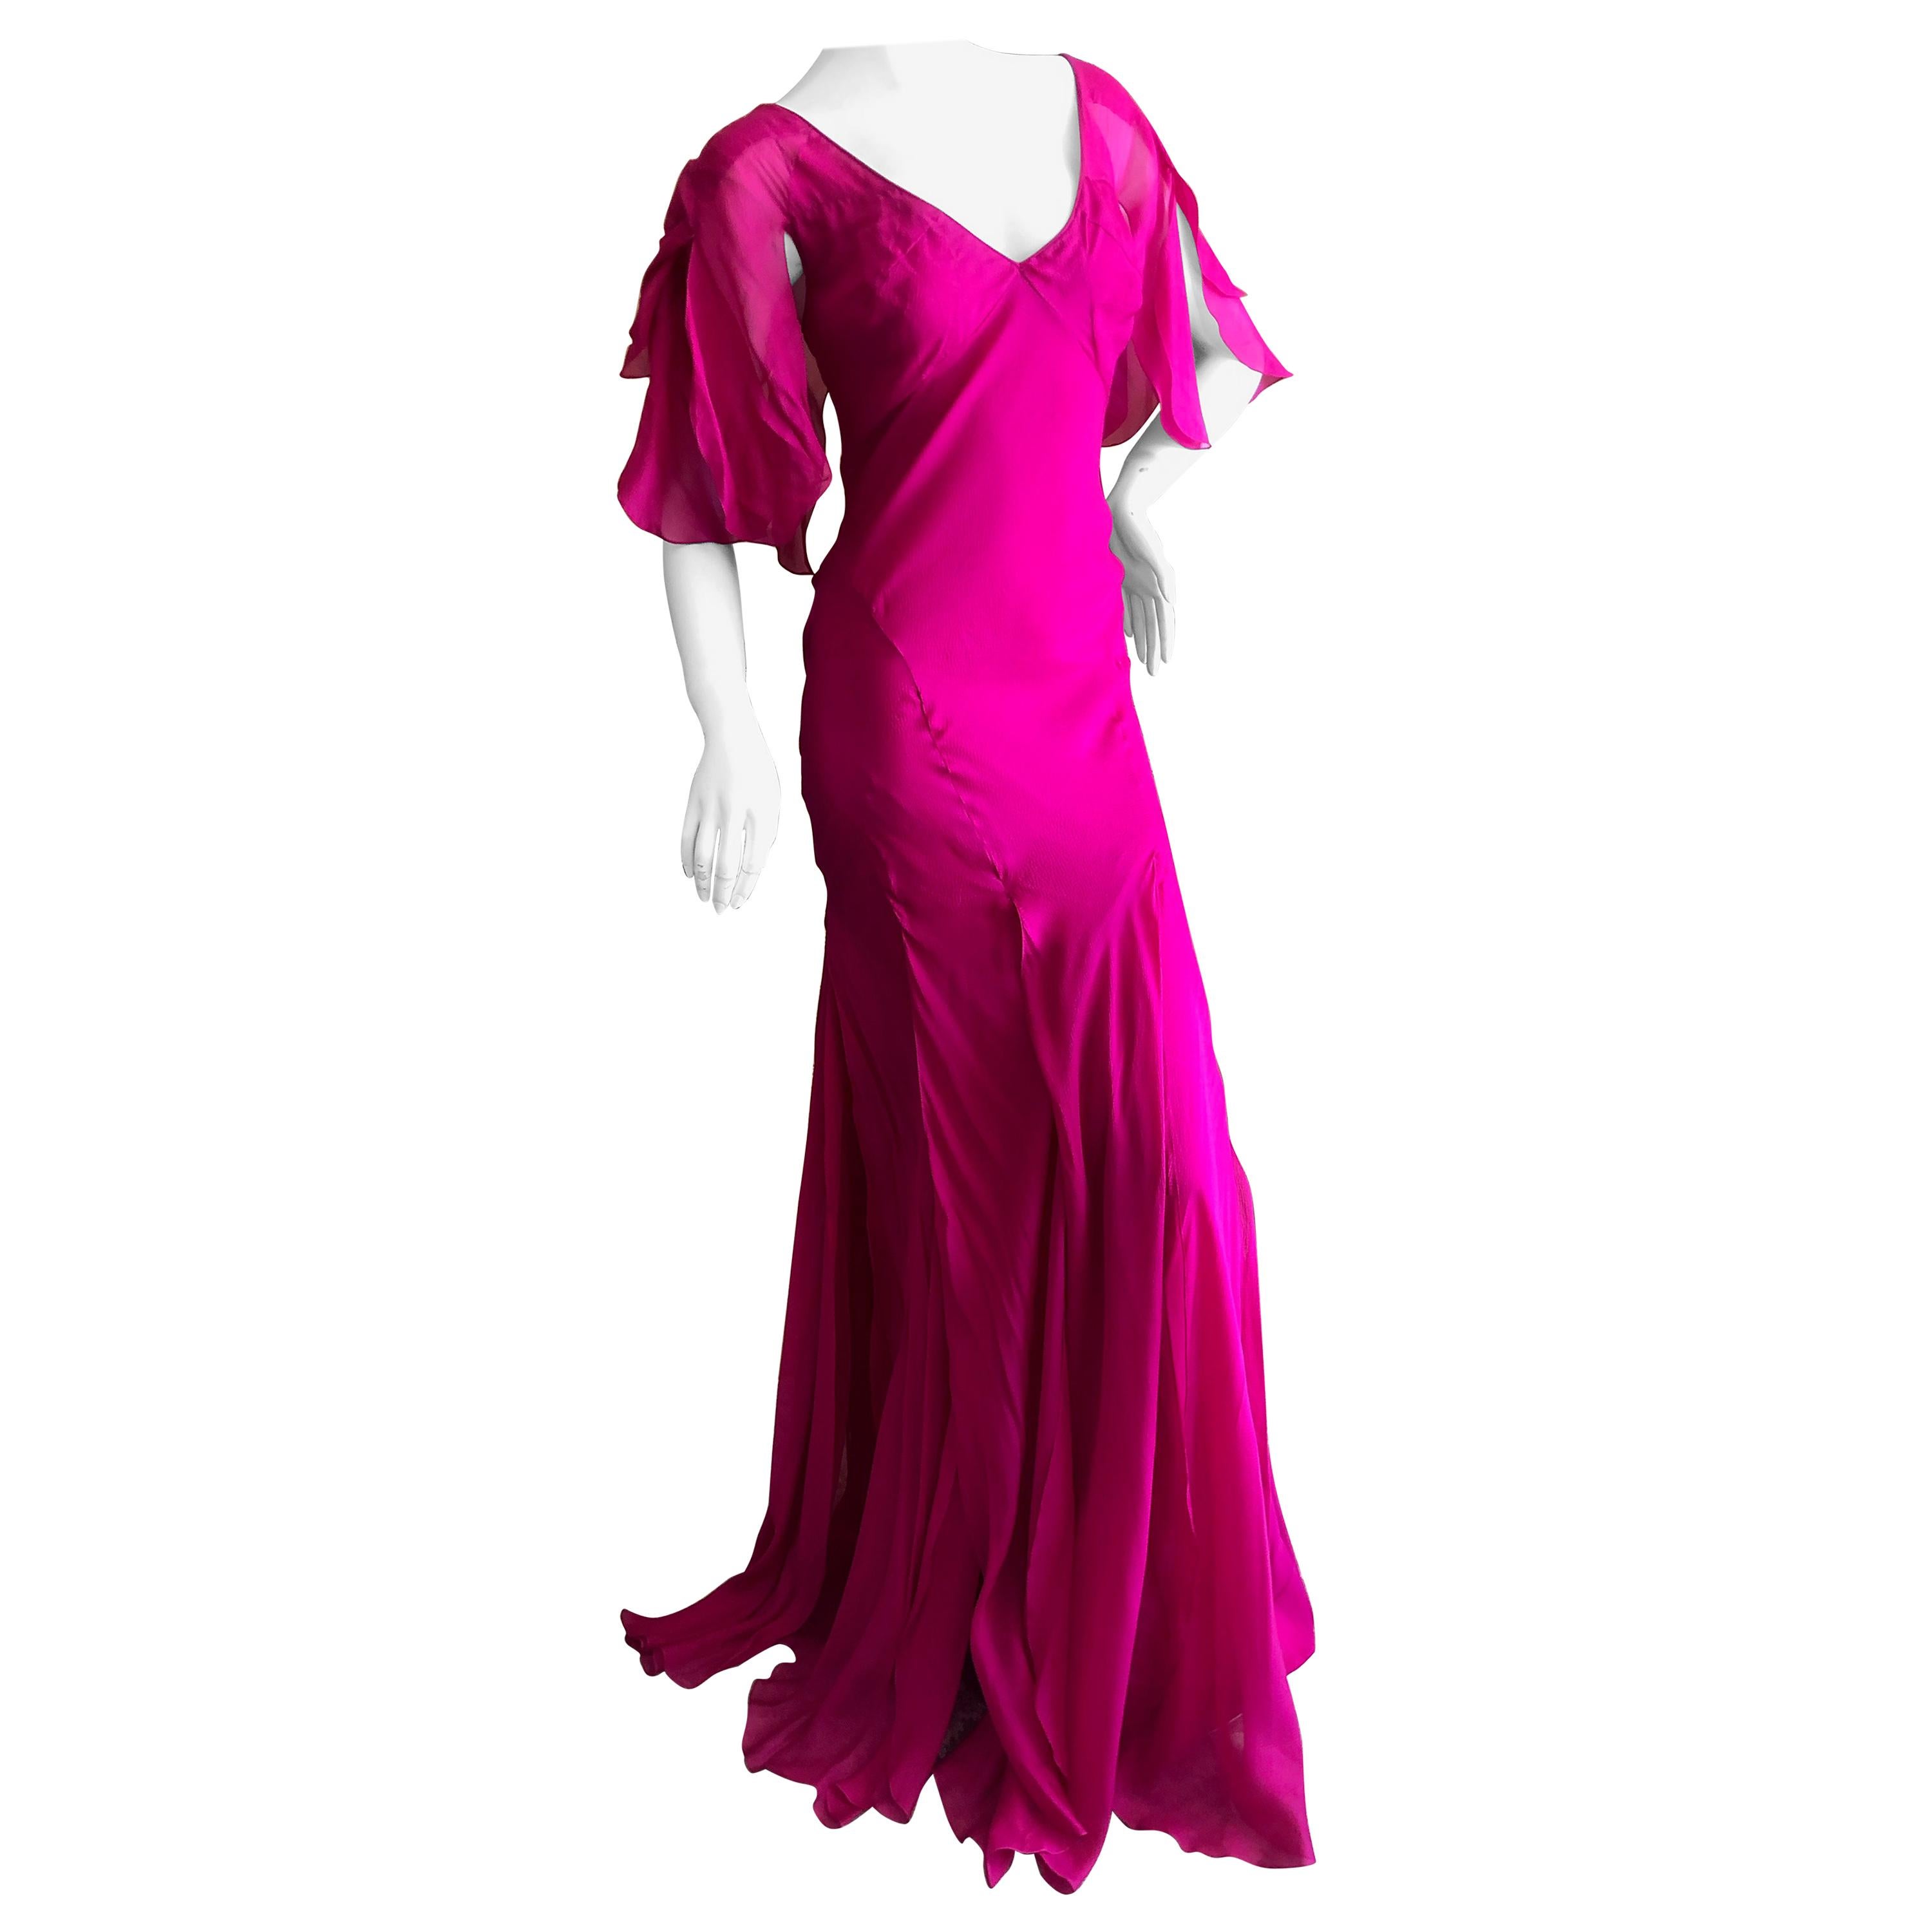   John Galliano Vintage Bias Cut Hot Pink Silk Evening Dress Hard to find Sz 46